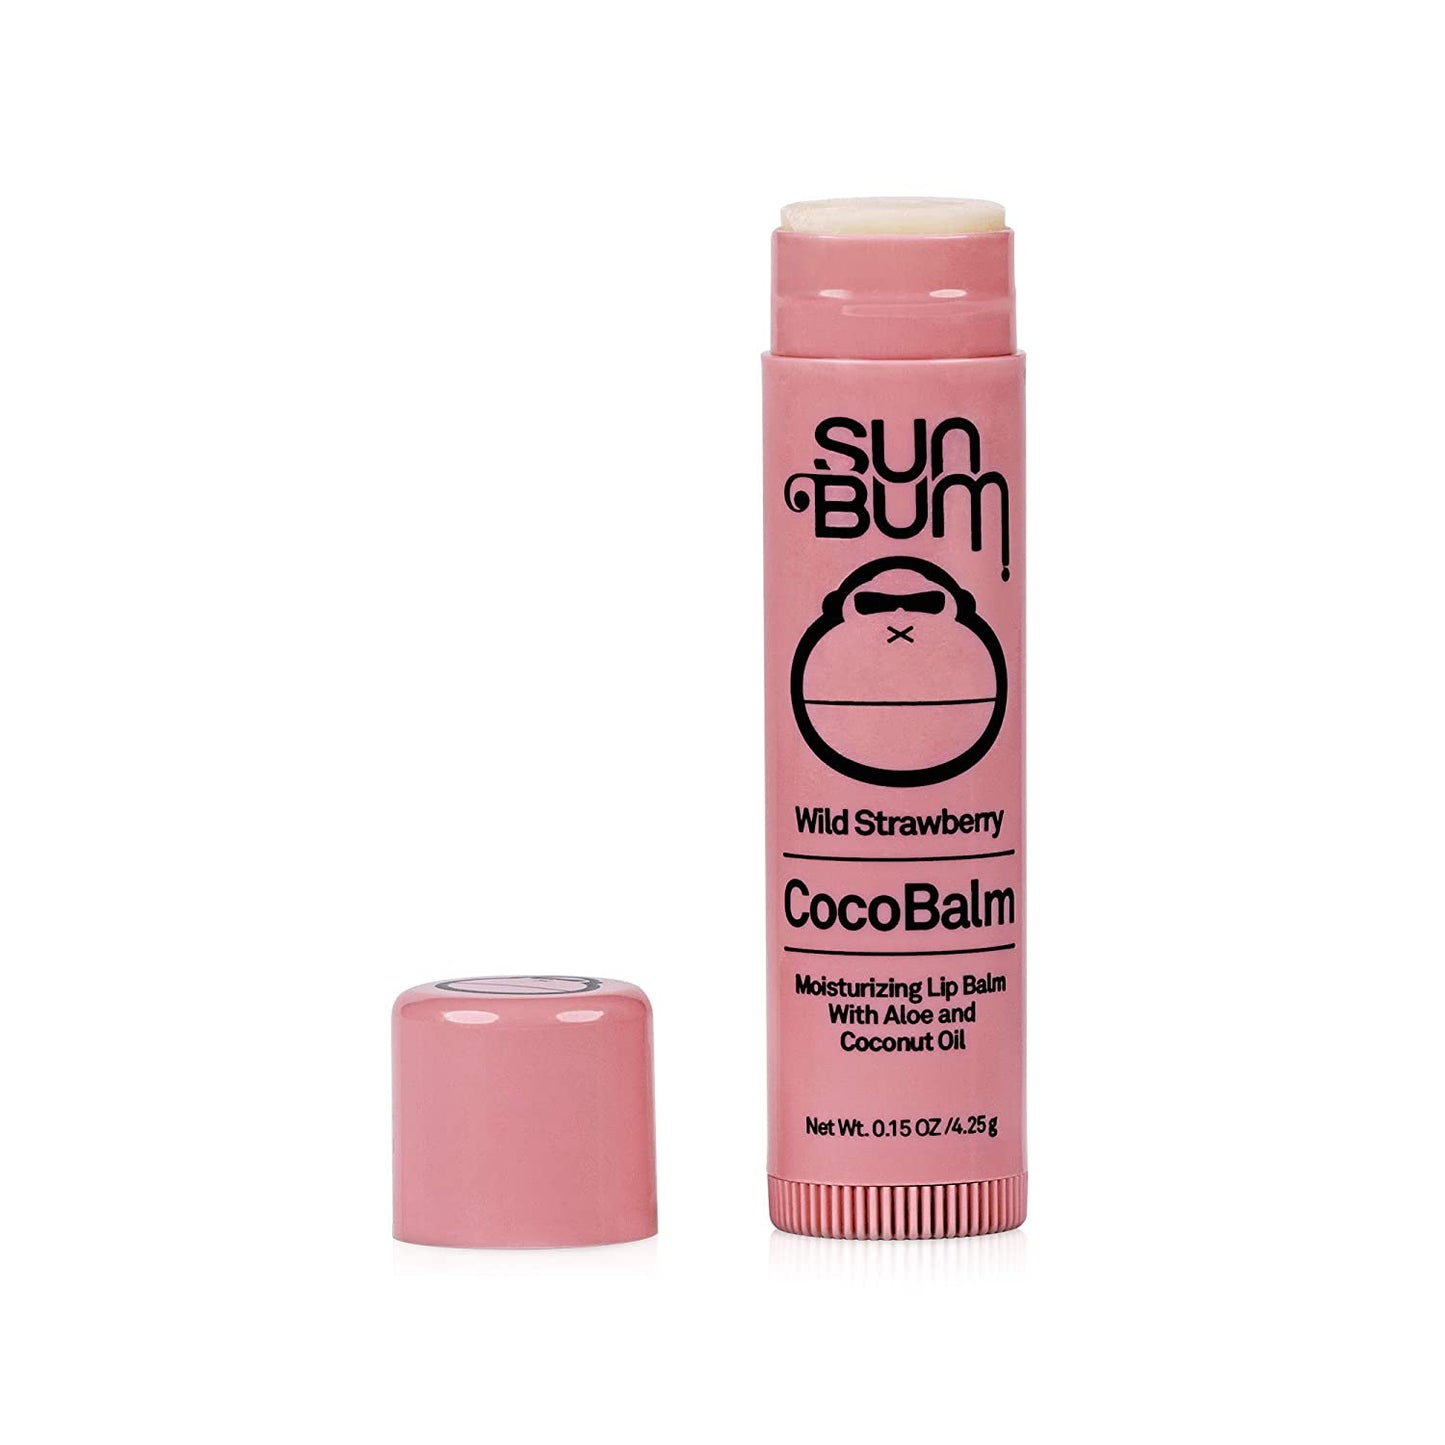 Sun Bum Wild Strawberry Cocobalm Moisturizing Lip Balm with Aloe & Coconut Oil, 0.15 oz. / 4.25g